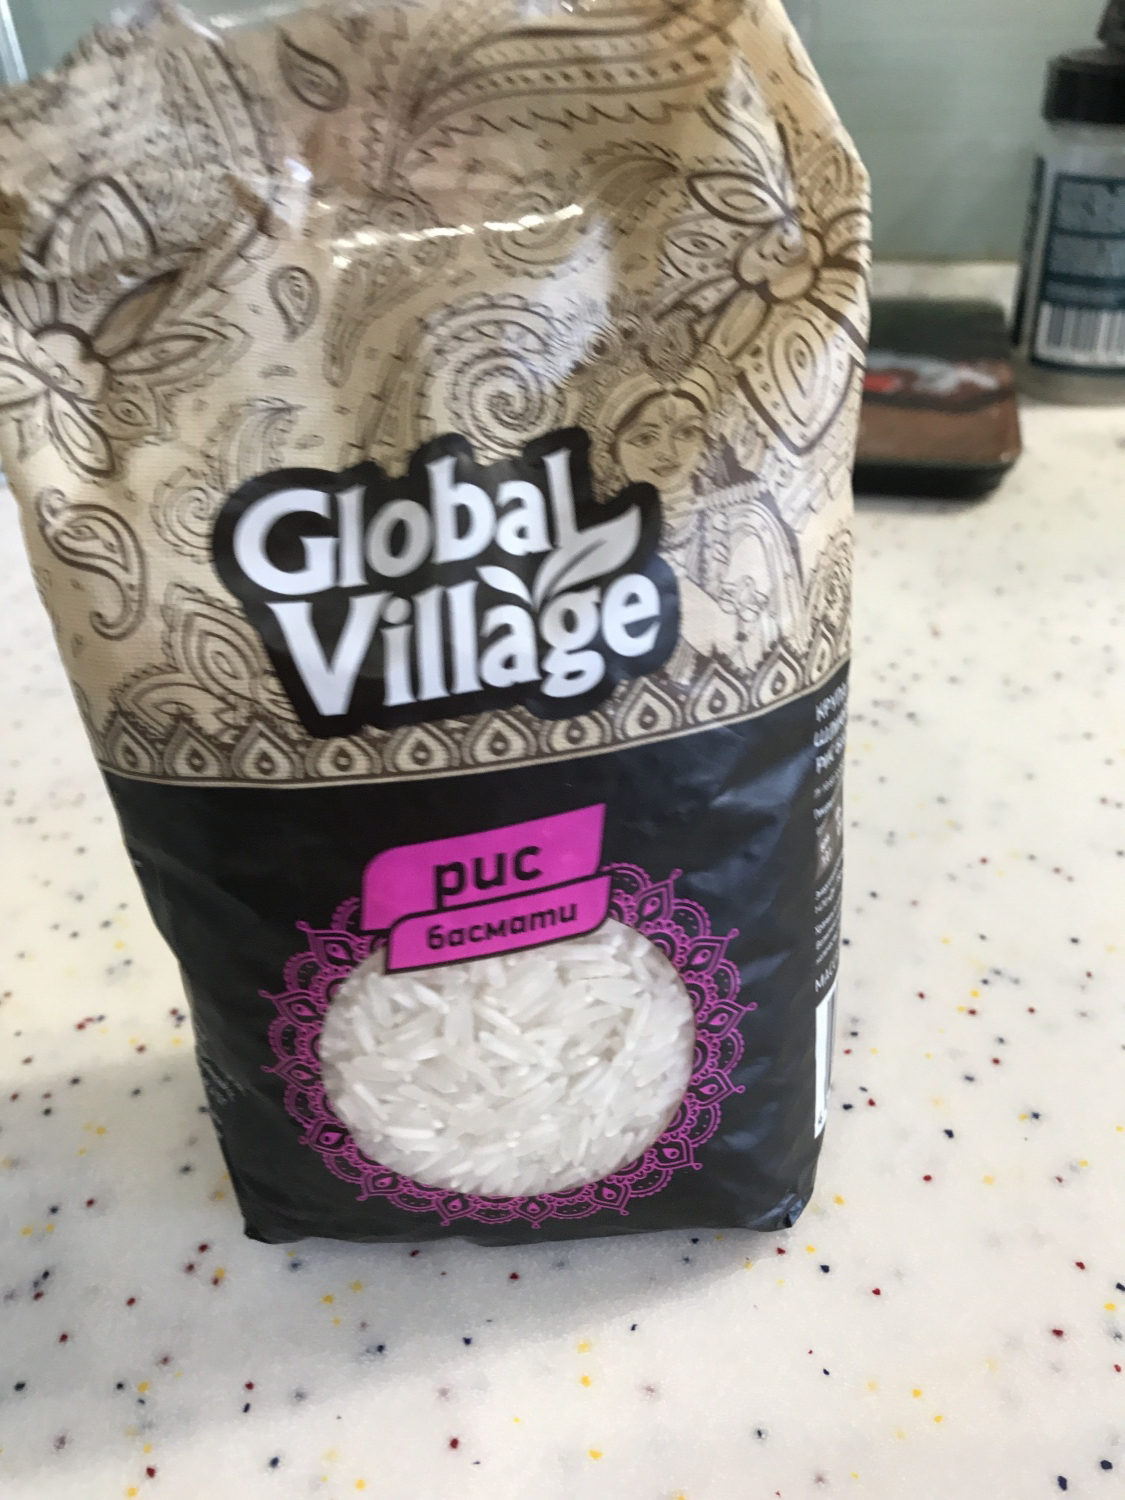 Global village суп. Рис басмати Global Village. Рис басмати, Global Village, 450 г. Глобал Виладж рис басмати 450г. Рис басмати Global Village в пакетиках.